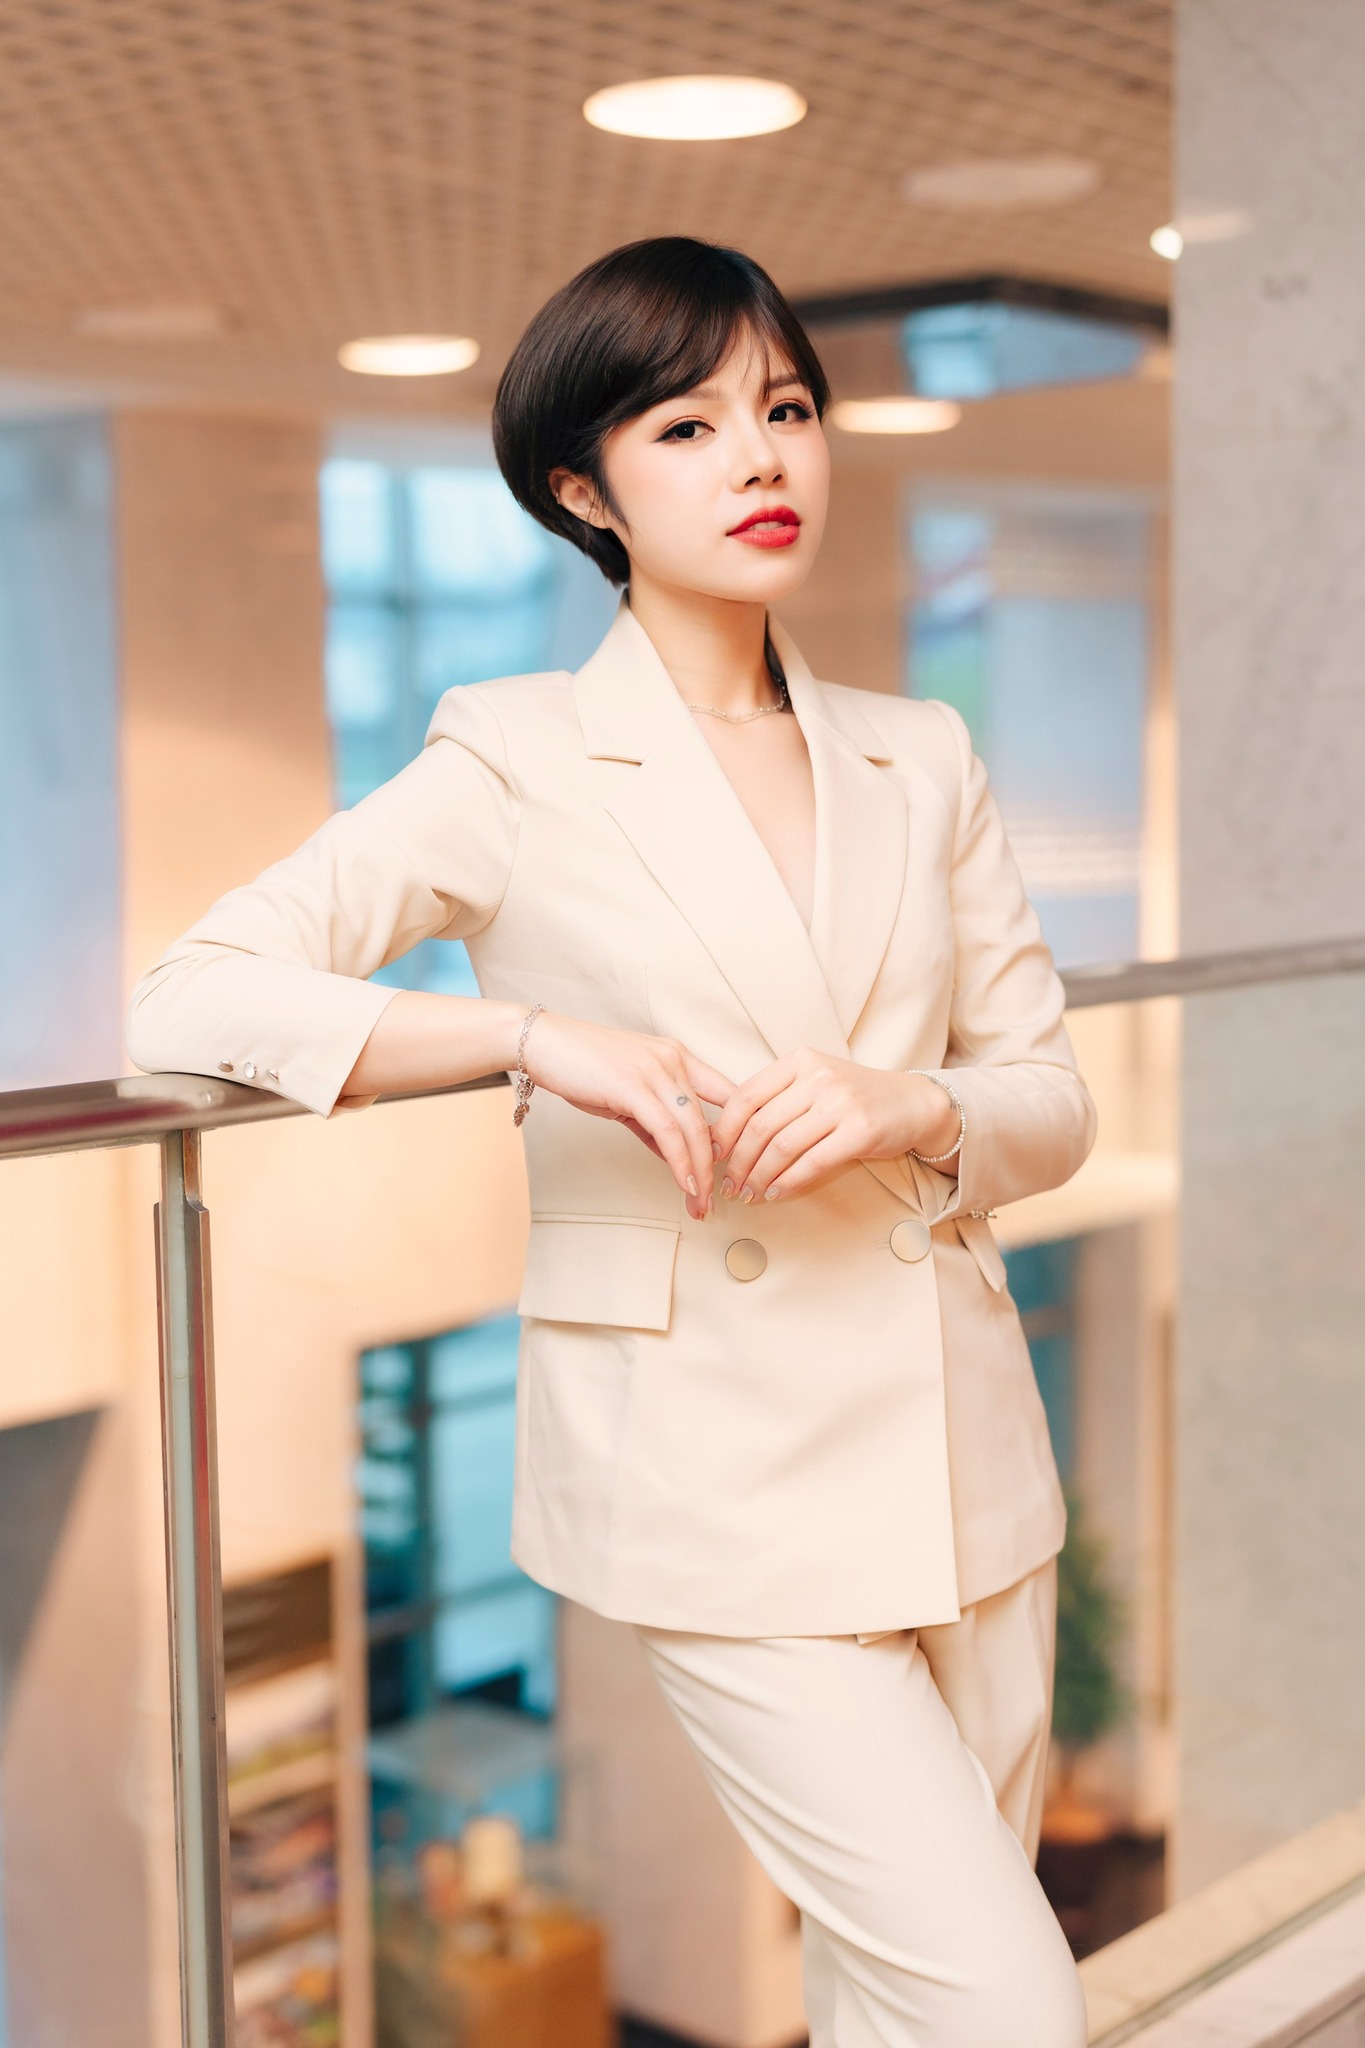 Top 10 shop bán áo vest nữ đẹp nhất ở TPHCM  sakurafashionvn